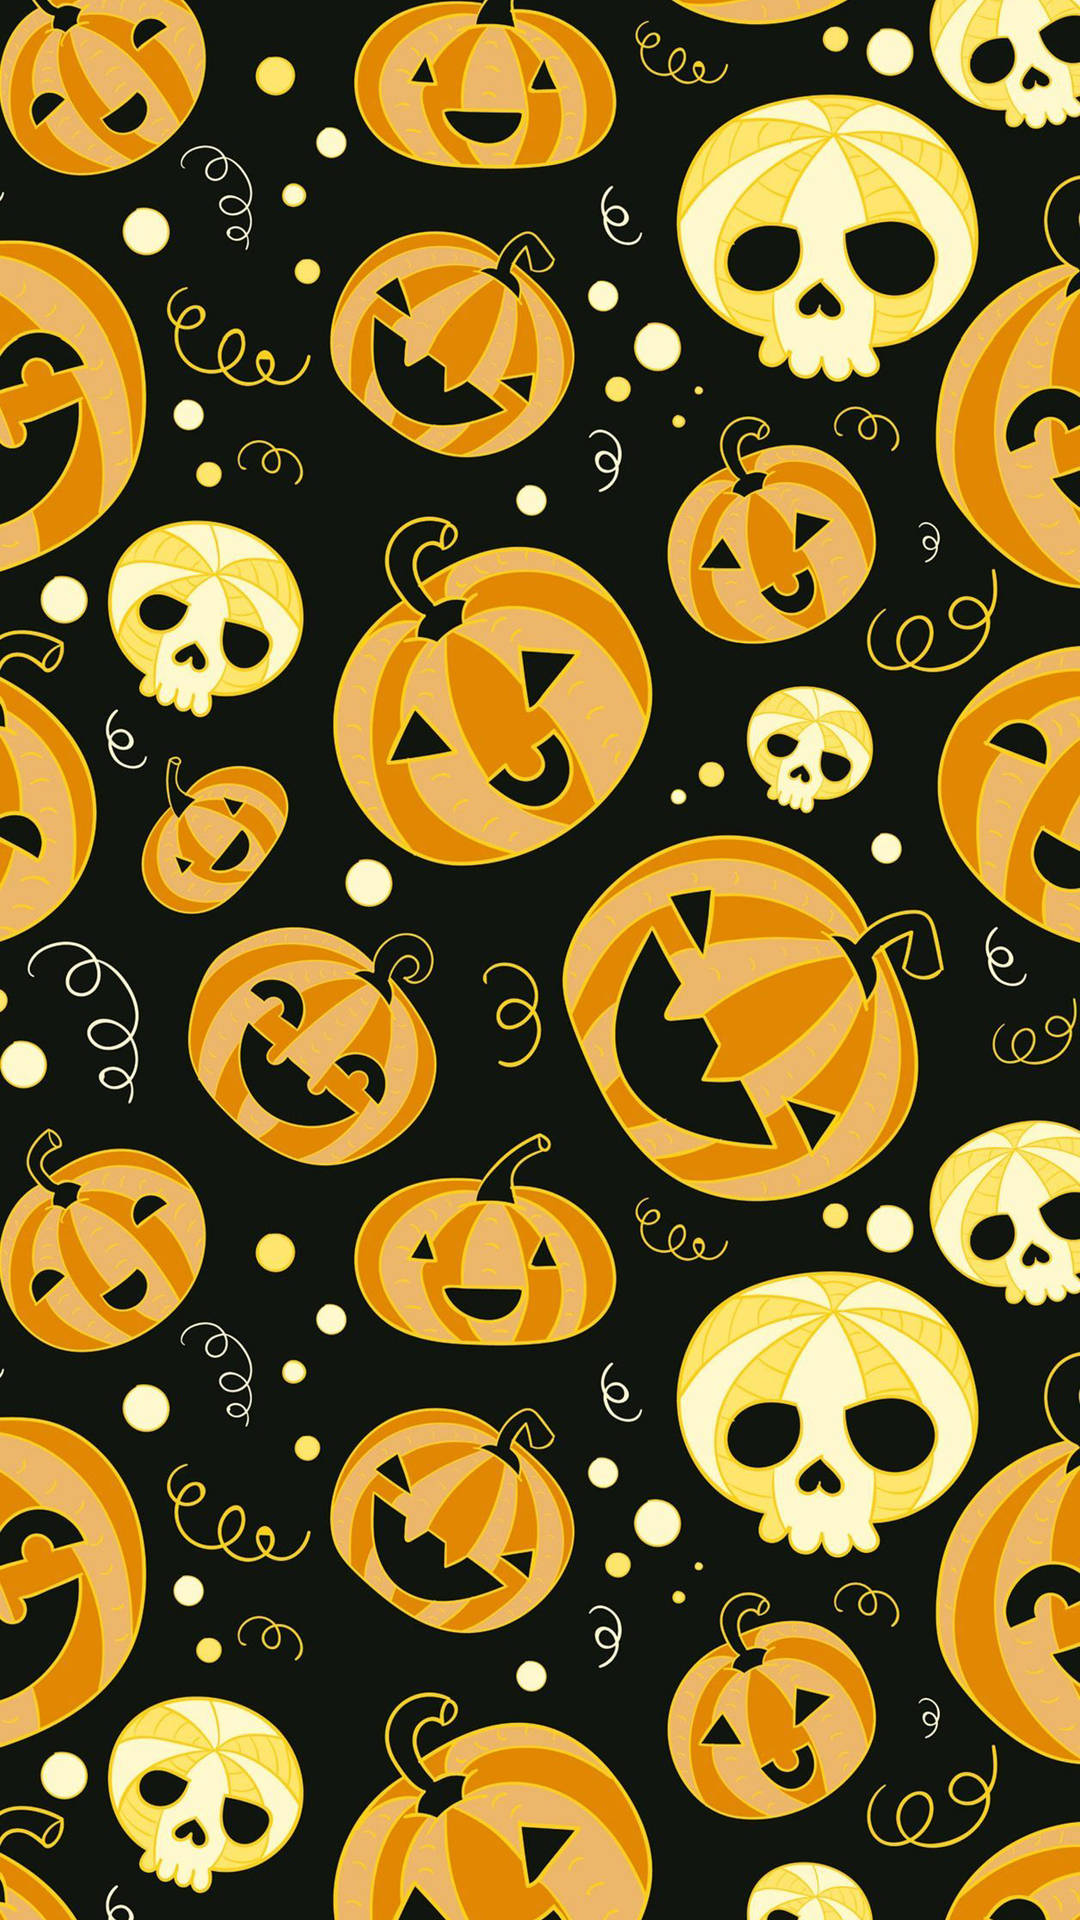 Download Pumpkin And Skull Cute Halloween Iphone Wallpaper | Wallpapers.com